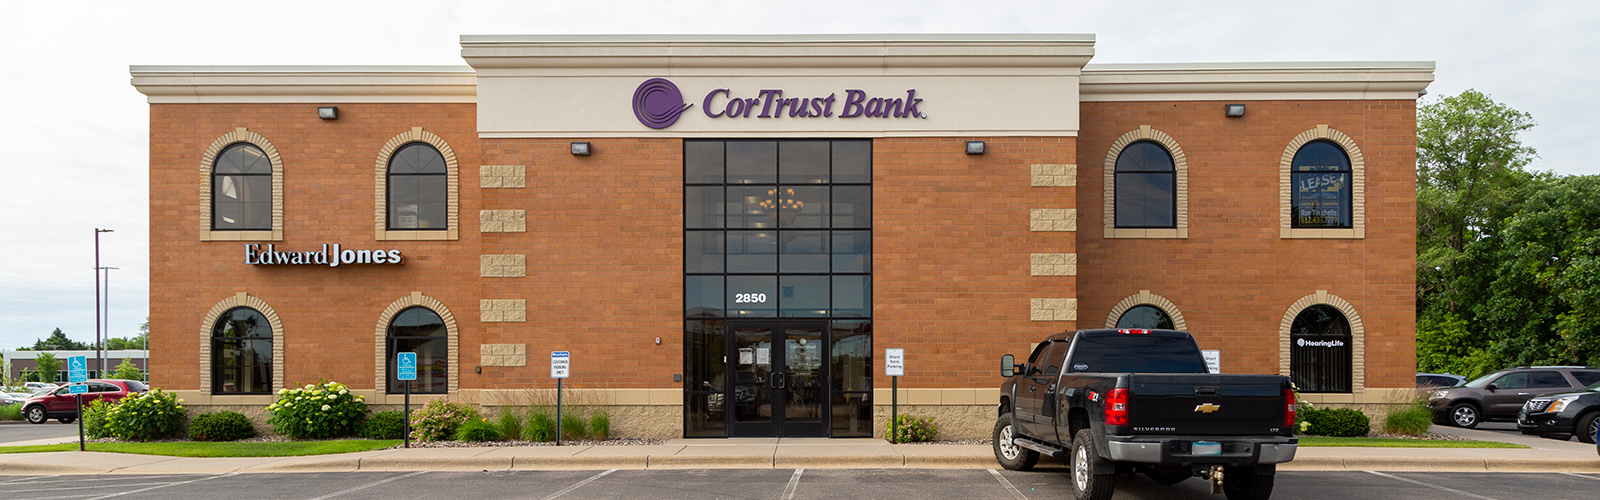 CorTrust Bank